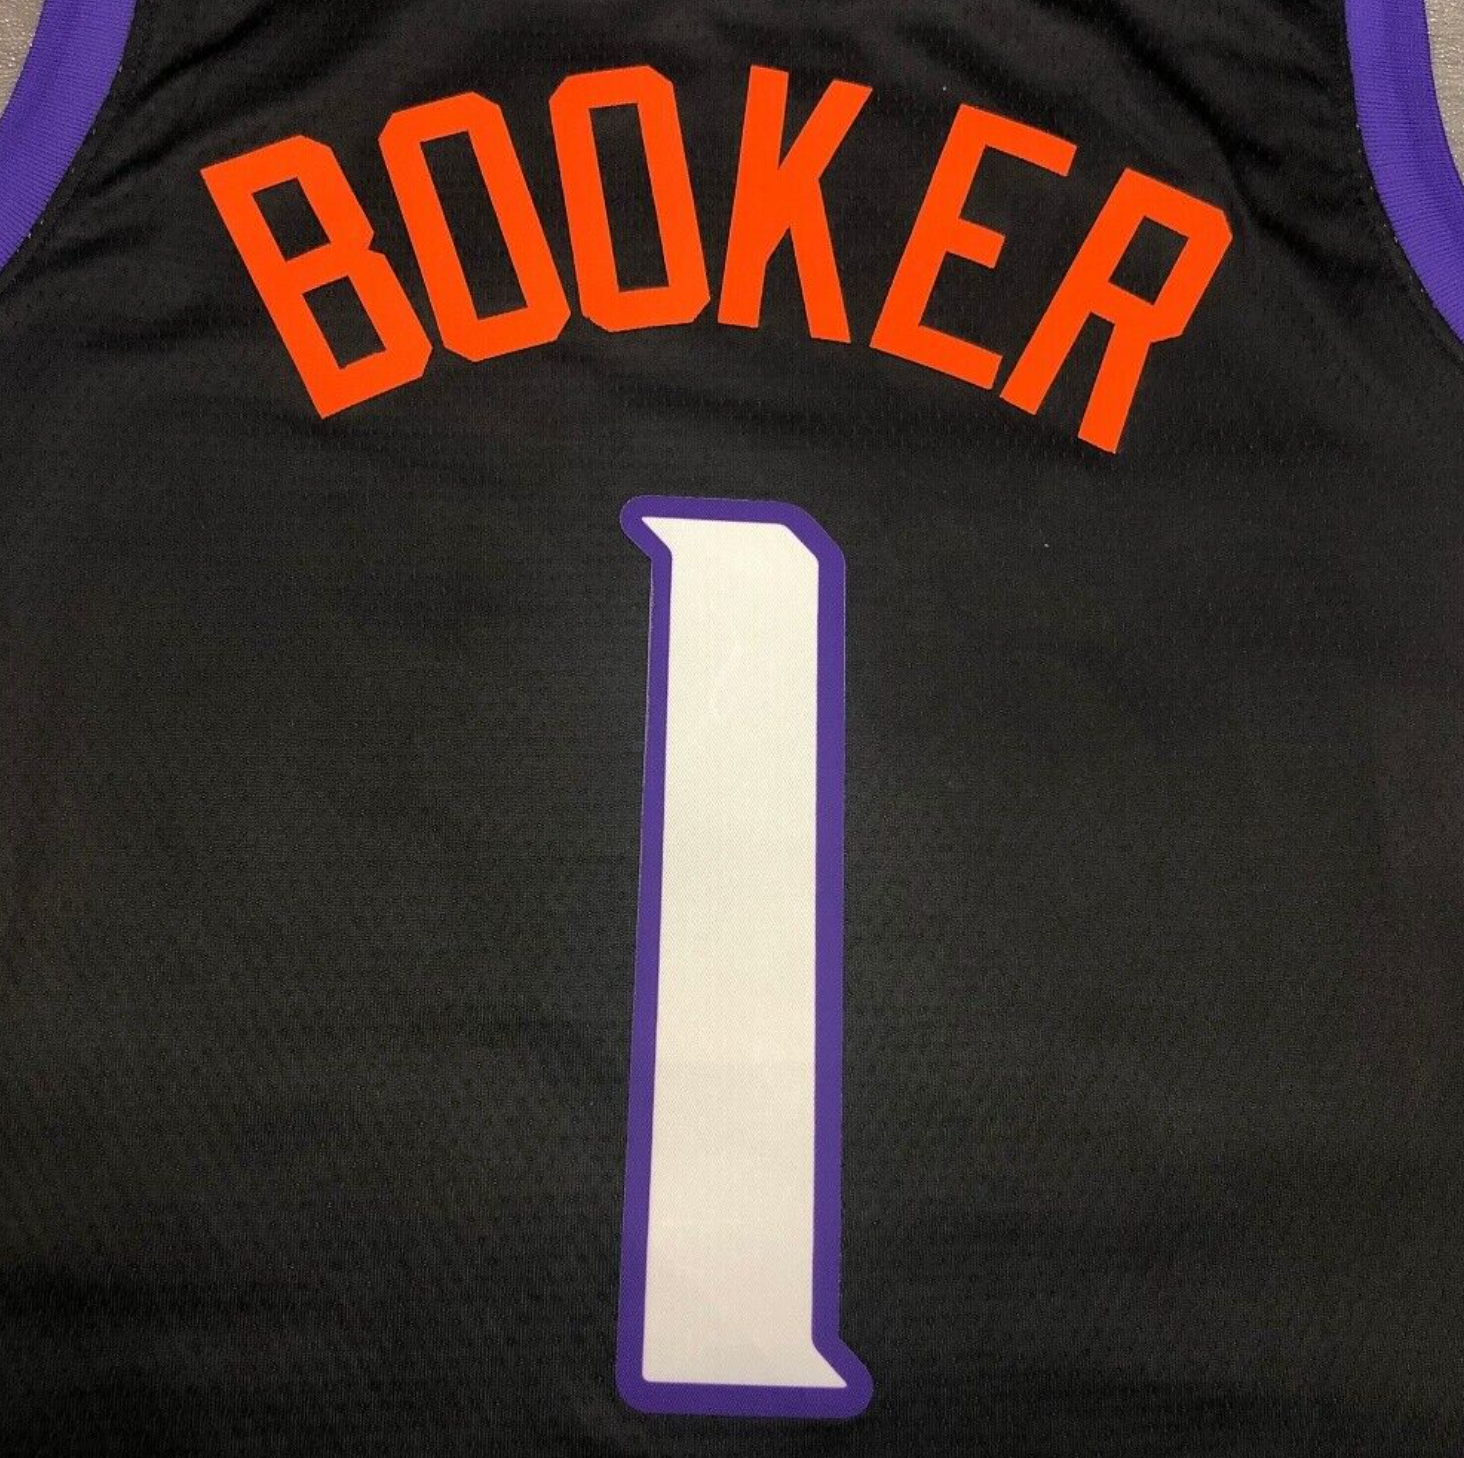 Phoenix Suns The Valley Devin Booker #1 Black Size M Jersey